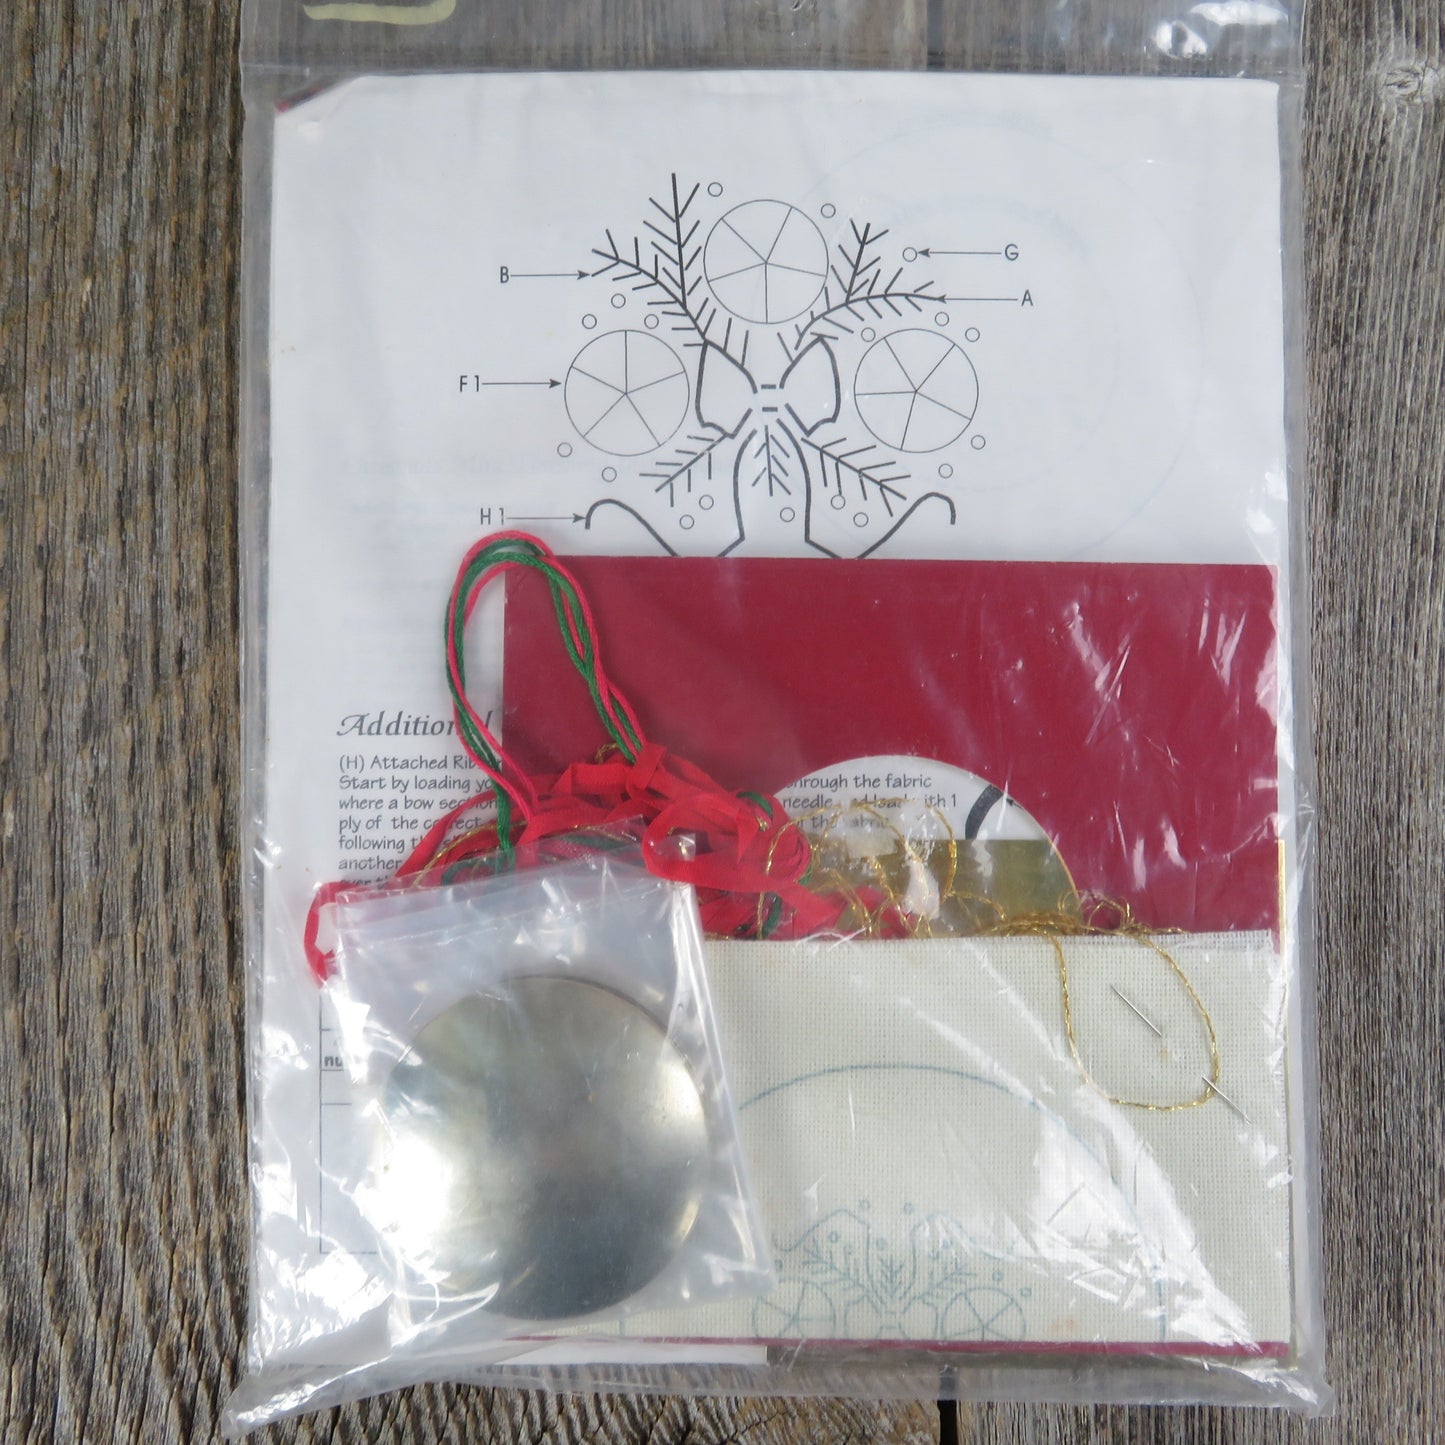 Ribbon Embroidery Christmas Mini Kit True Colors Craft Roses Mounted Jumbo Button SRK 70004 Beginner